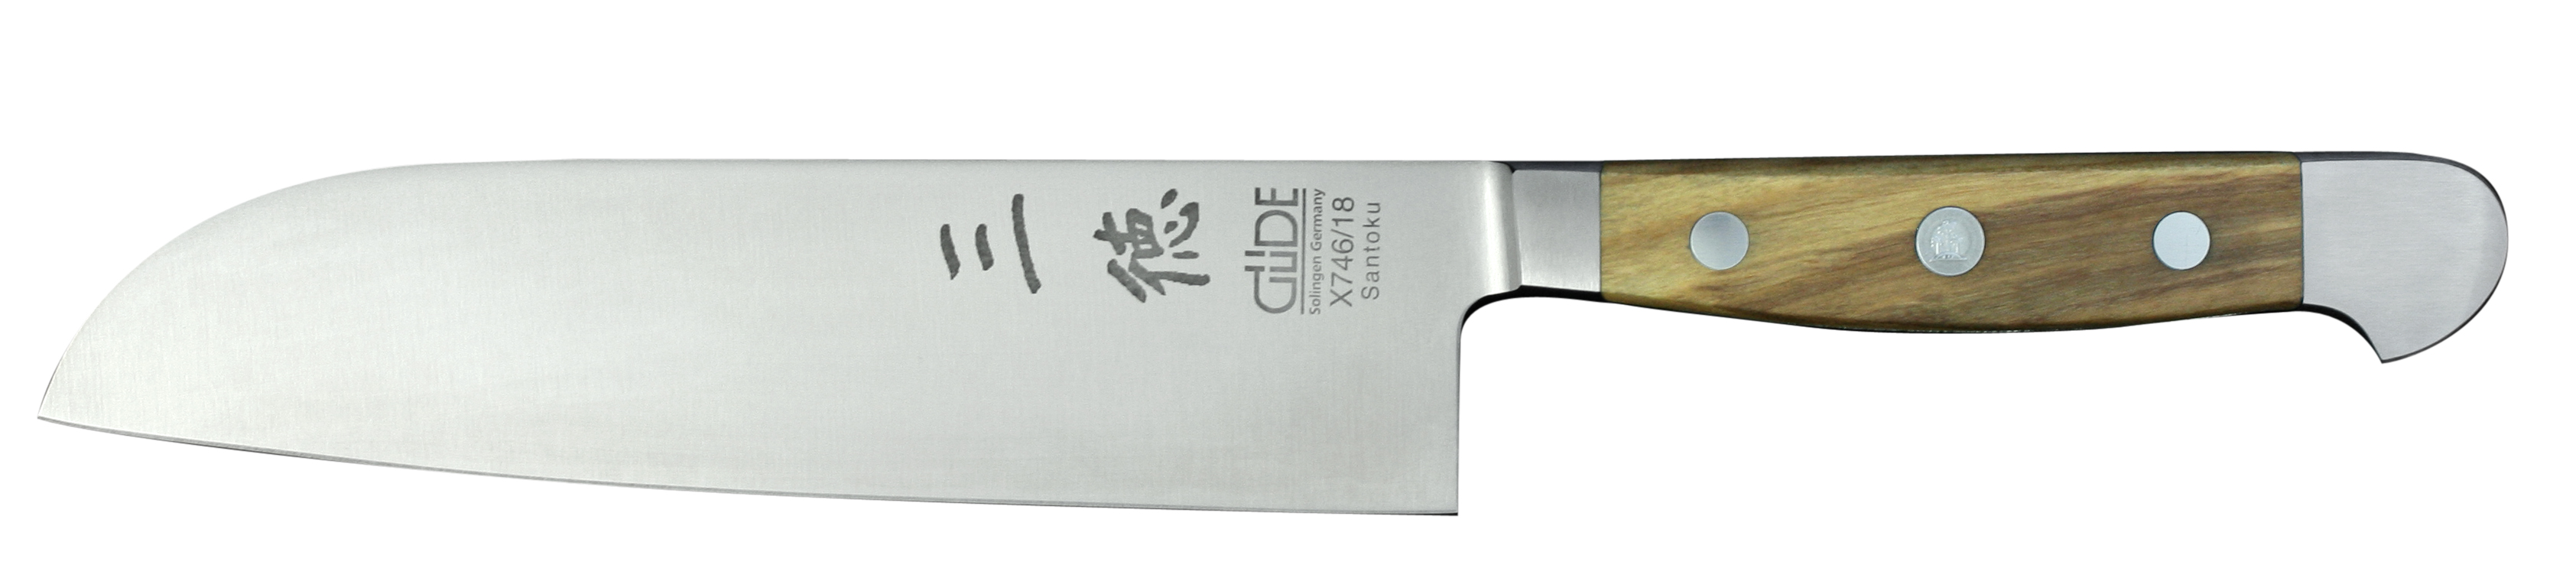 Güde Alpha Olive Santokumesser 18 cm / CVM-Messerstahl mit Griffschalen aus Olivenholz